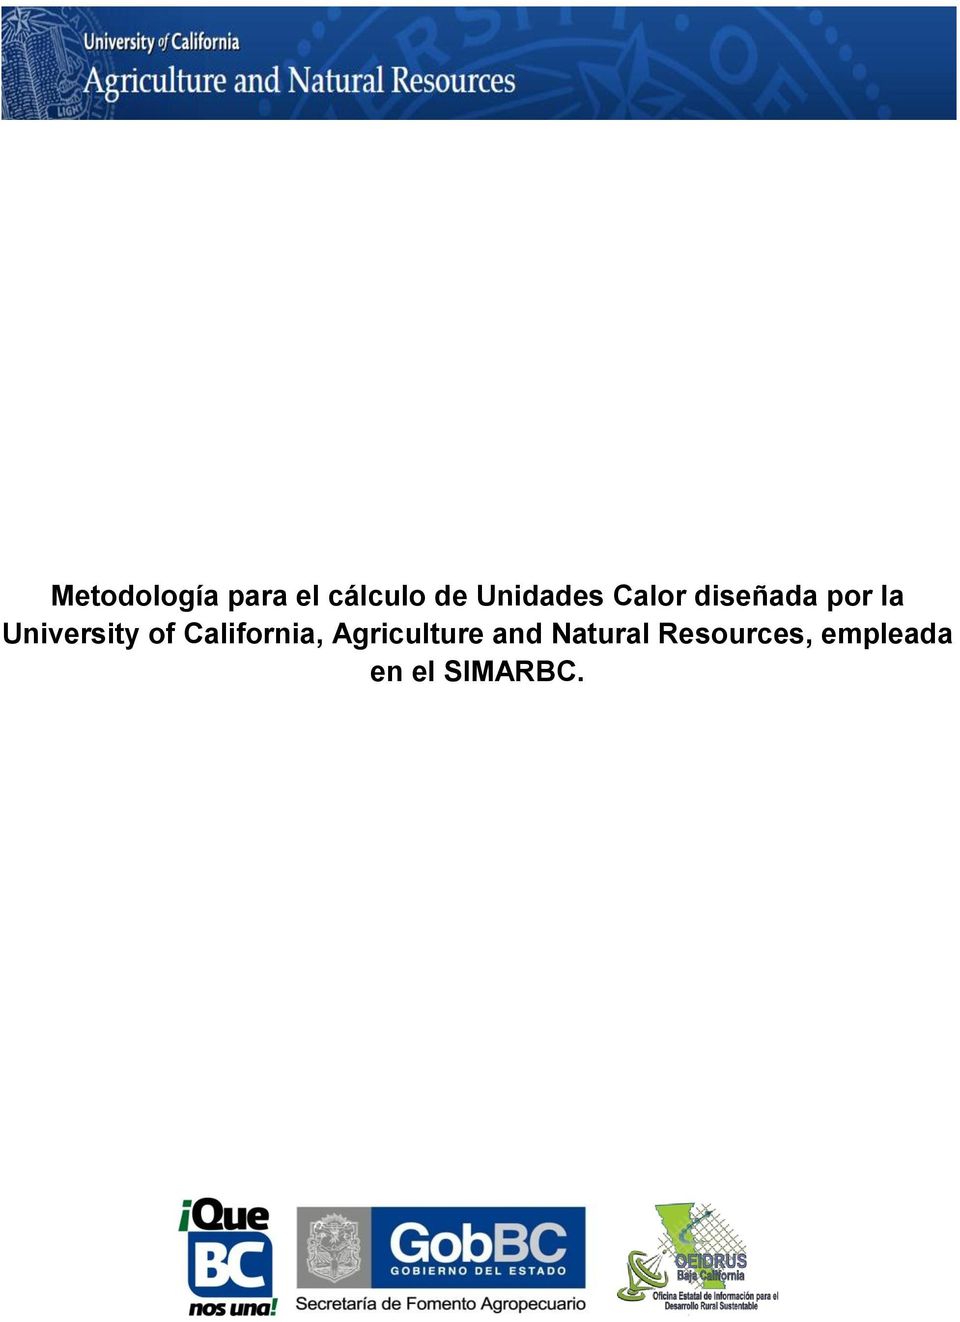 University of California,